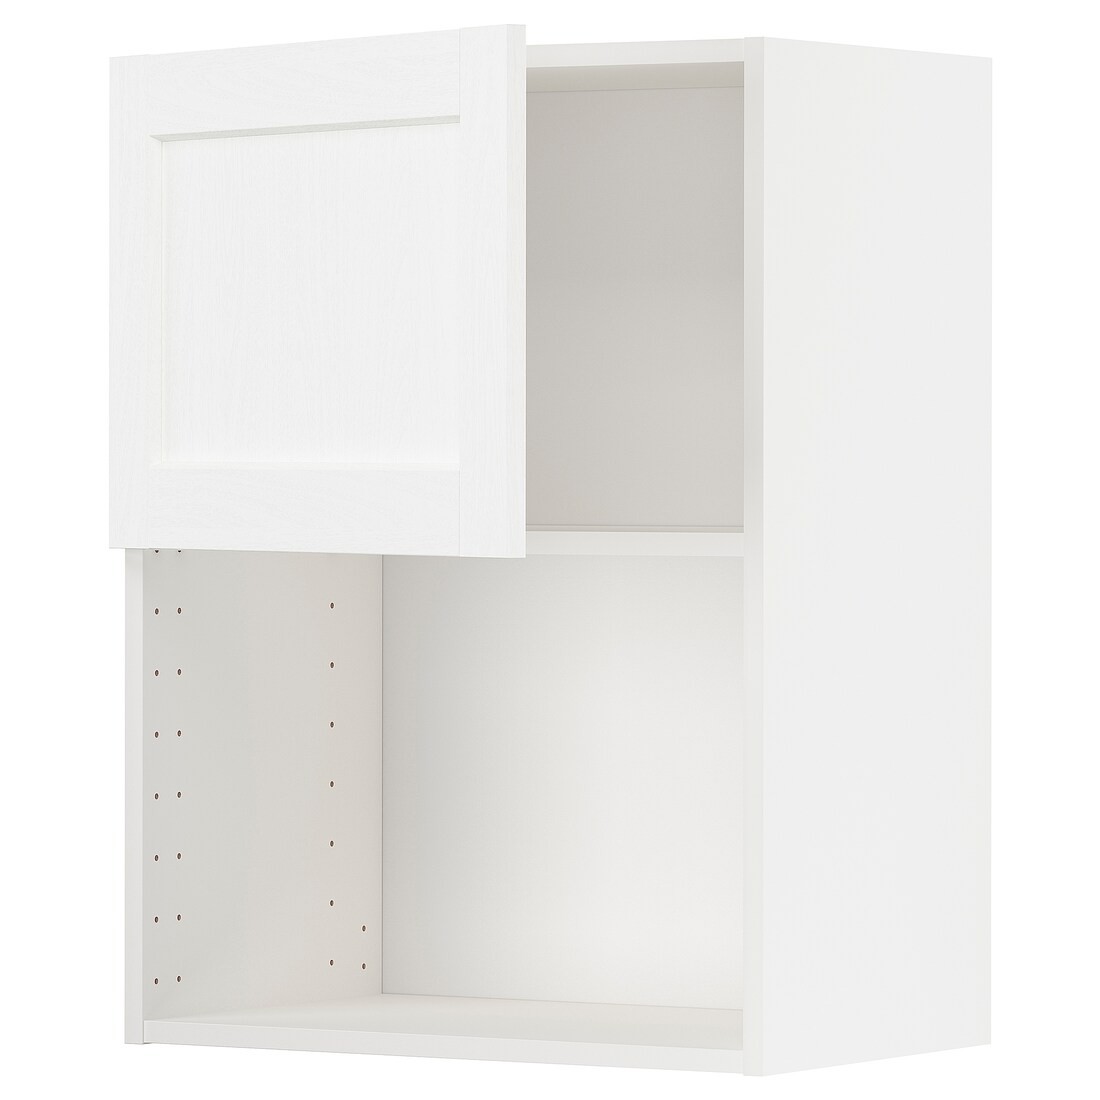 METOD МЕТОД Навесной шкаф для СВЧ-печи, белый Enköping / белый имитация дерева, 60x80 см